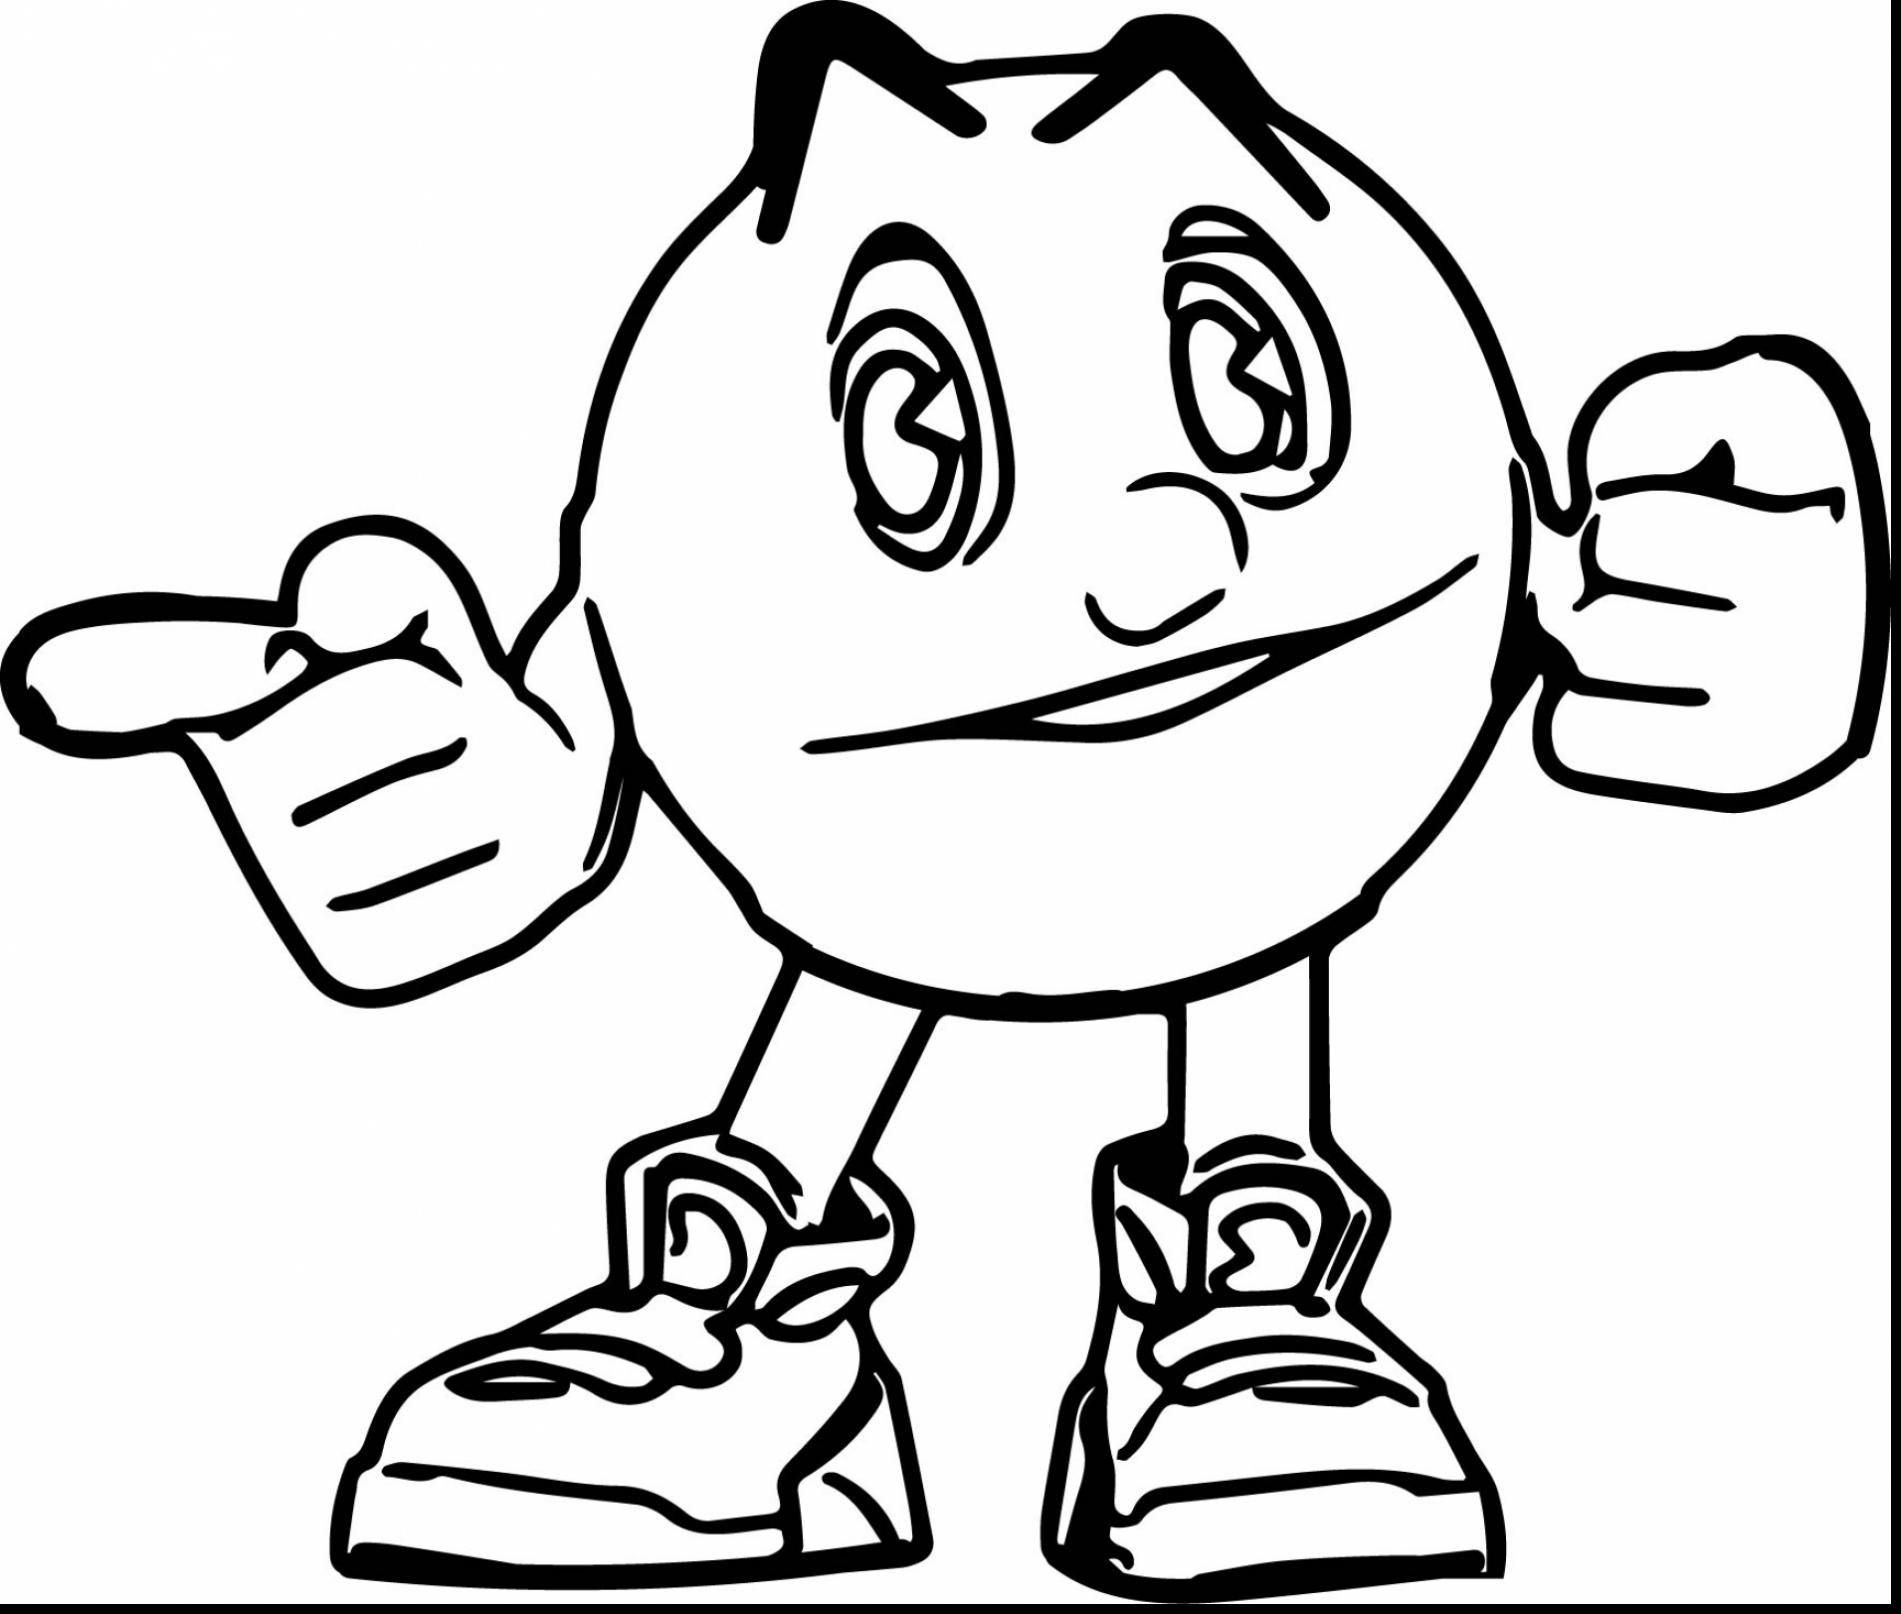 Pacman Ghost Drawing at GetDrawings | Free download